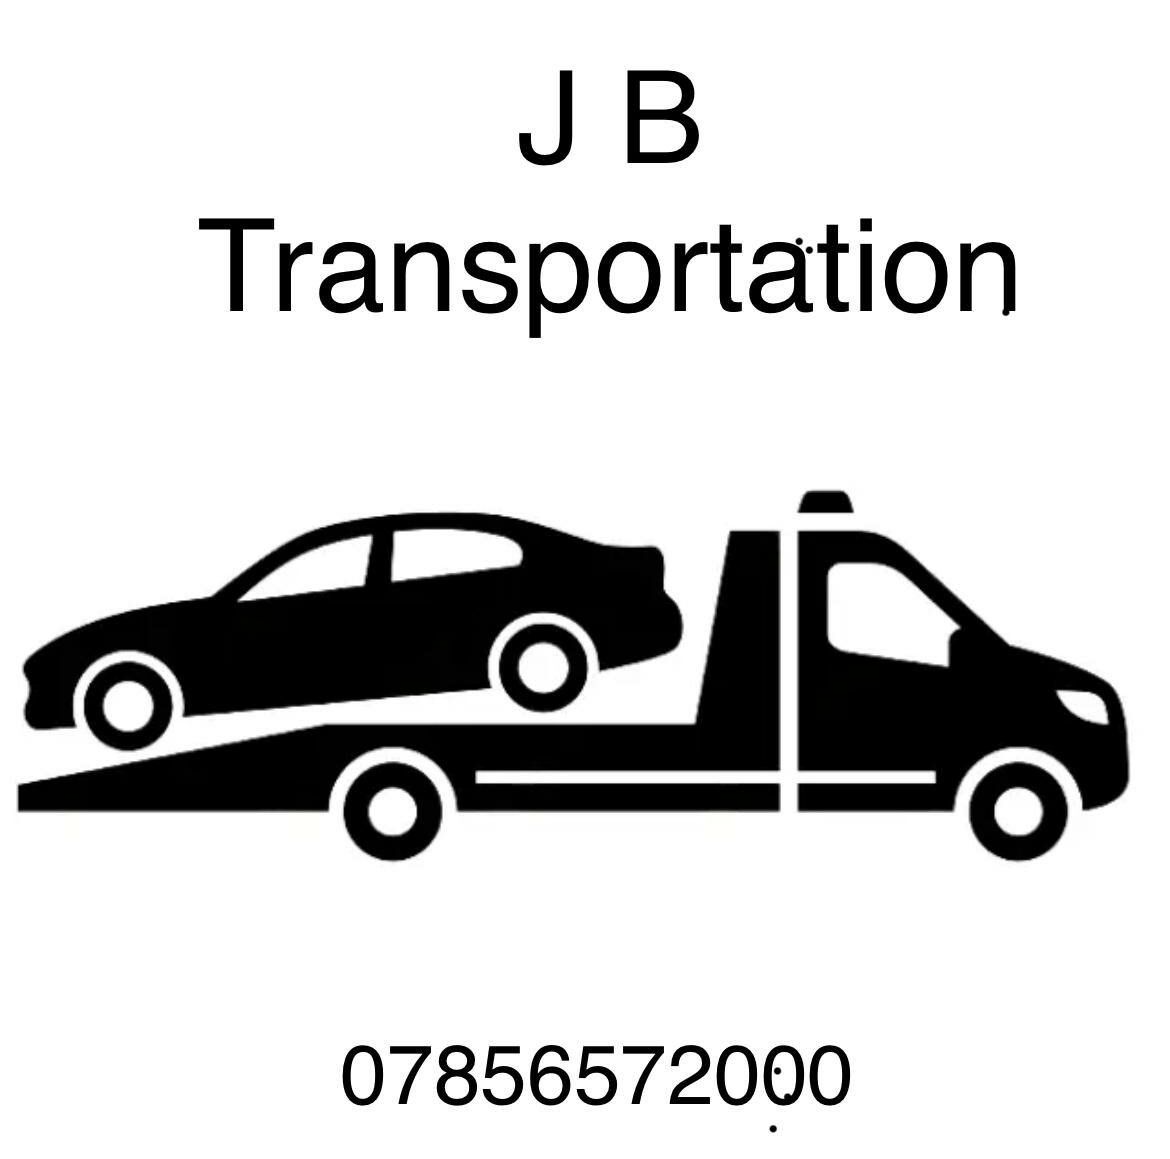 JB Transportation Evoke Classics Free Trade Directory